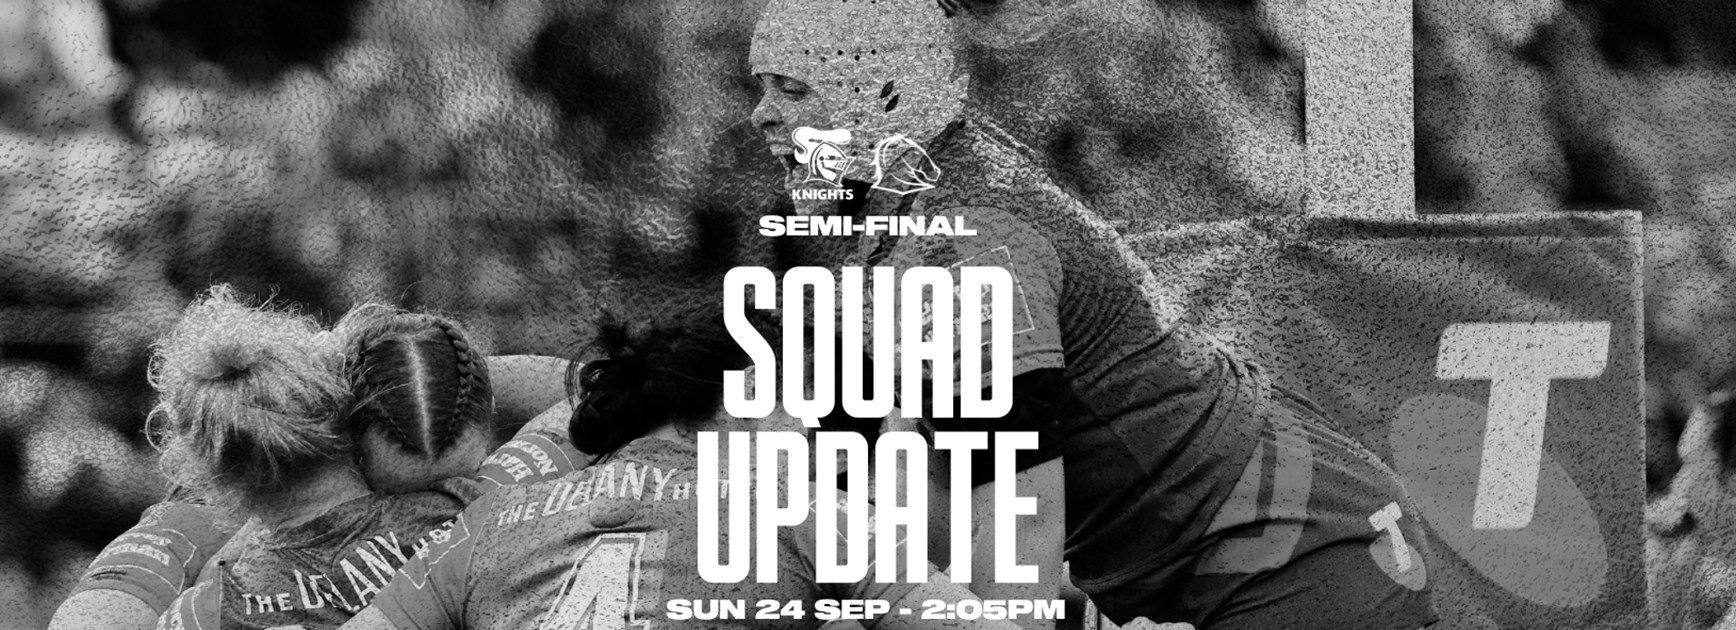 NRLW Squad Update: Forward returns for Semi Final